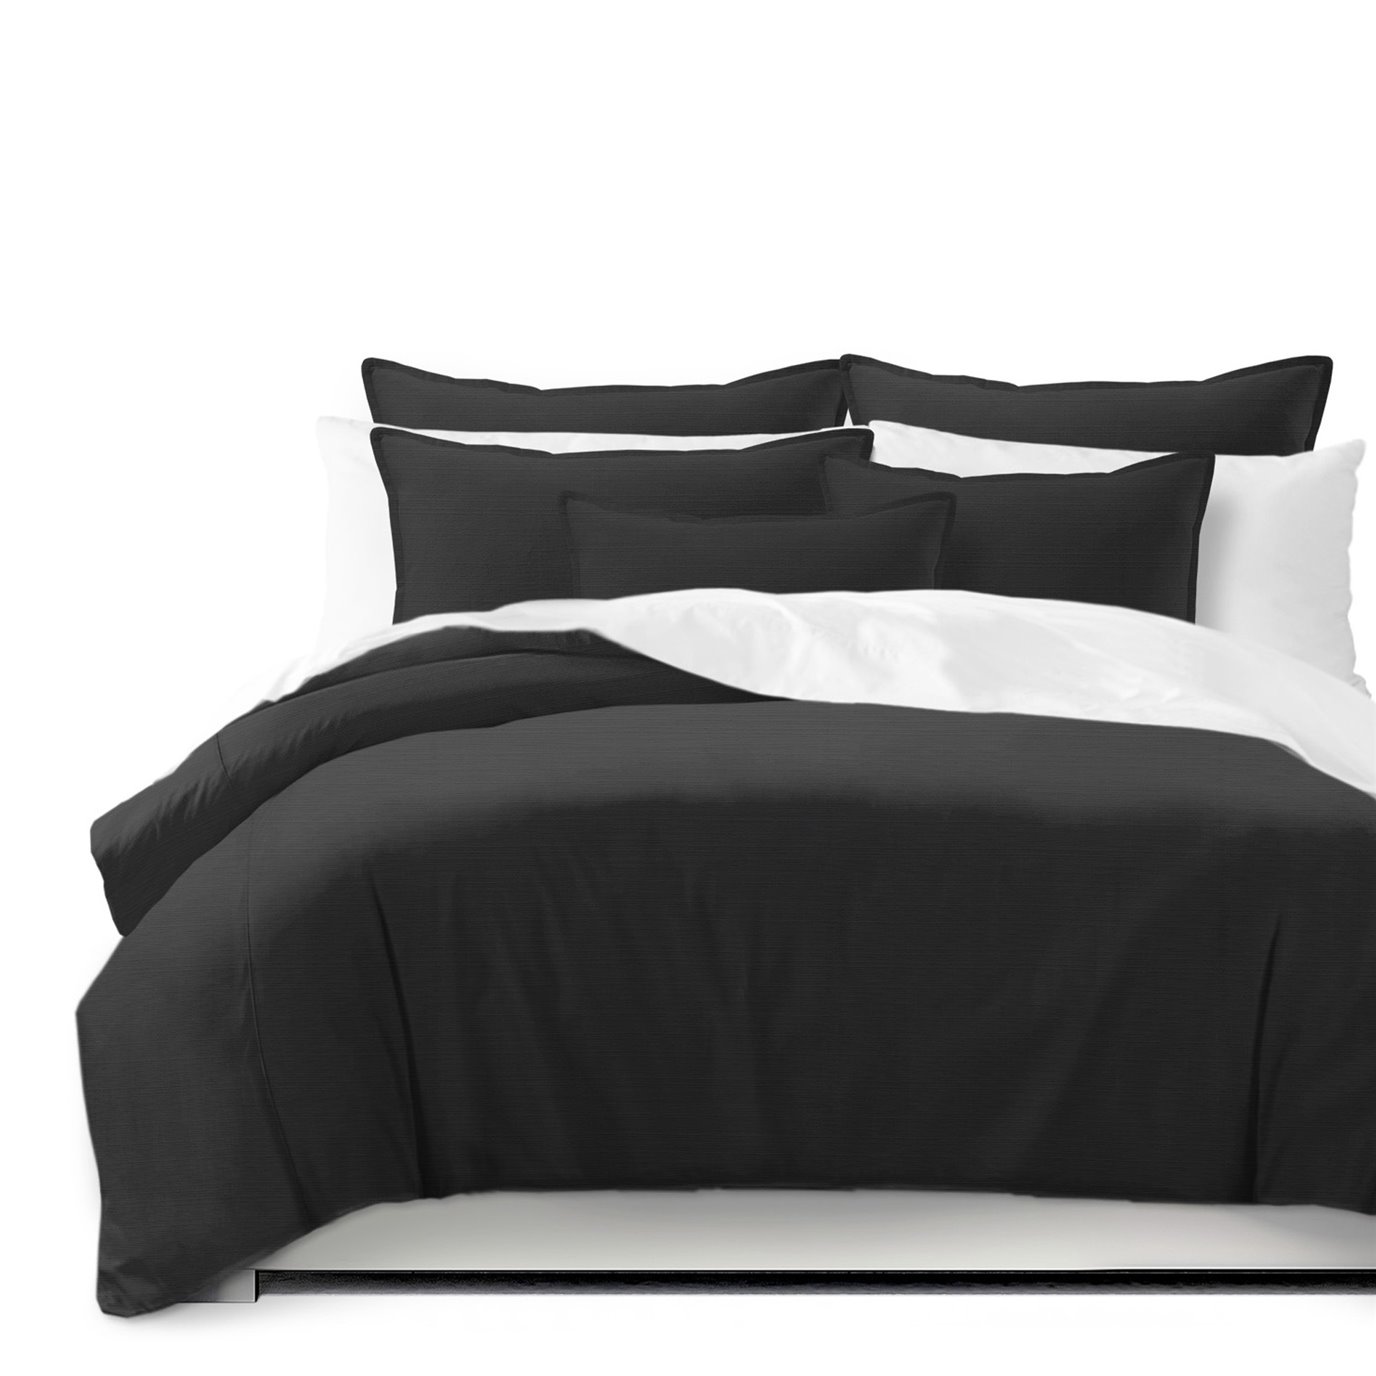 Nova Black Coverlet and Pillow Sham(s) Set - Size King / California King